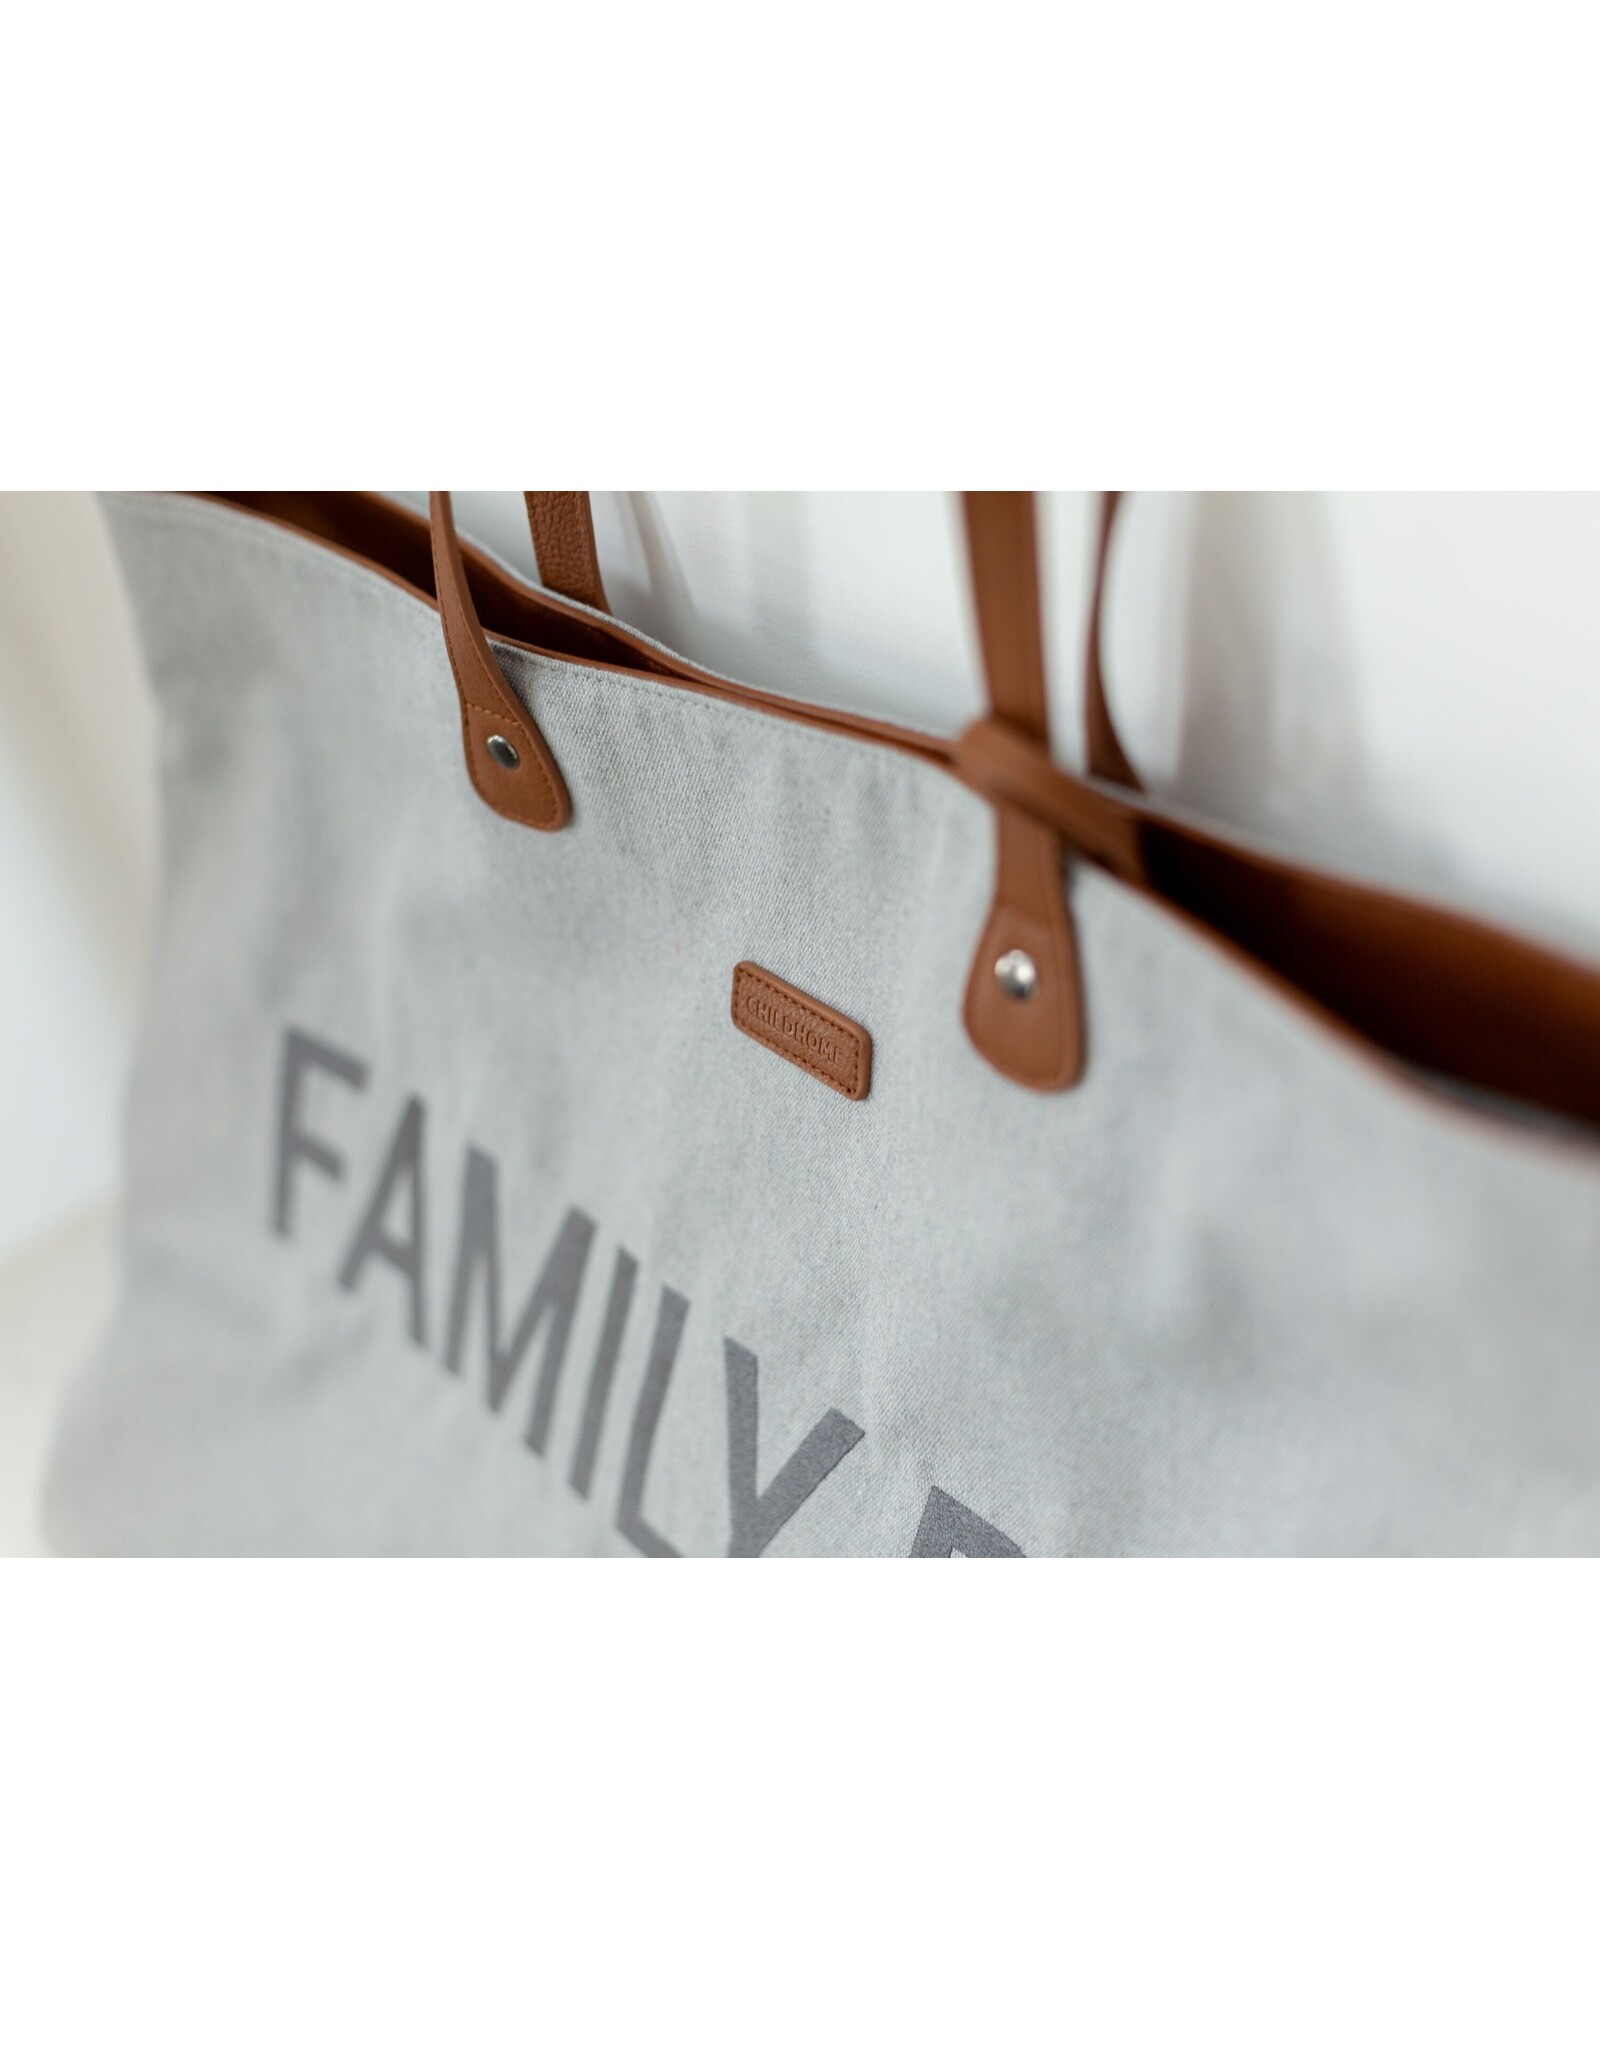 Childhome Family bag - Canvas - Gris